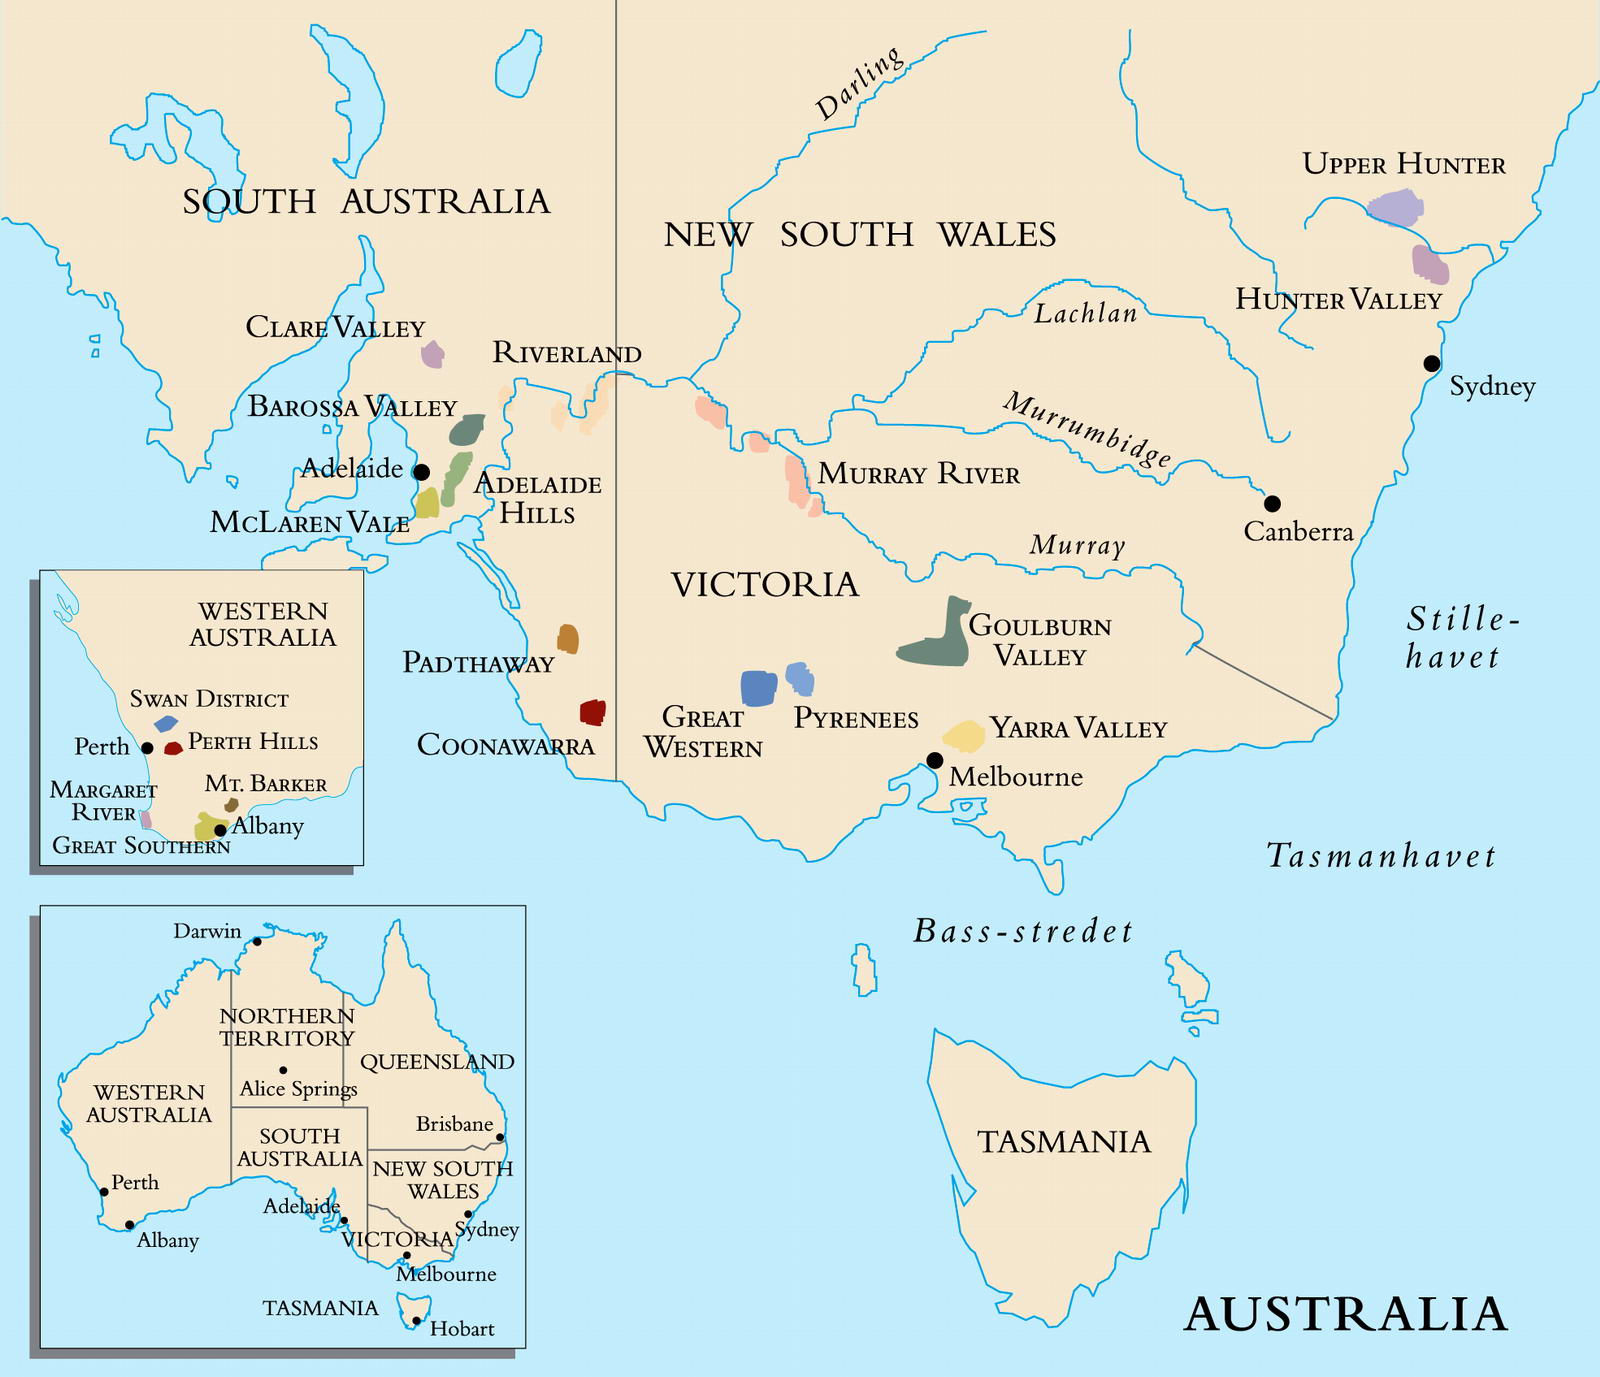 kart-australia-south-western-tasmania-new-south-wales.jpg